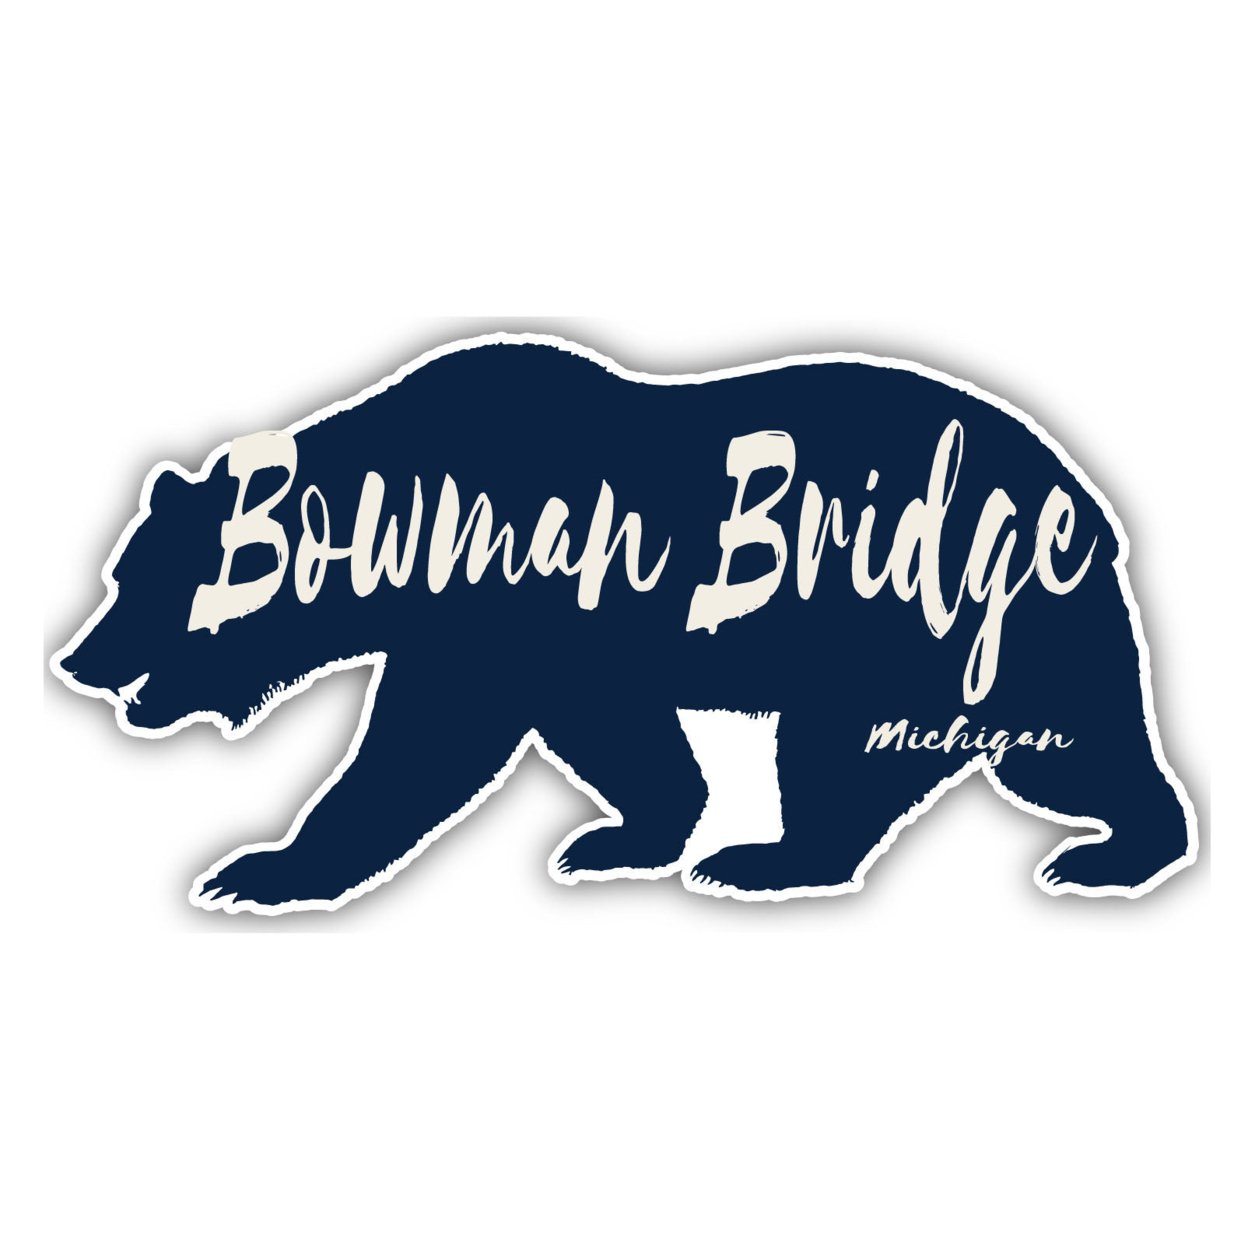 Bowman Bridge Michigan Souvenir Decorative Stickers (Choose Theme And Size) - Single Unit, 8-Inch, Bear